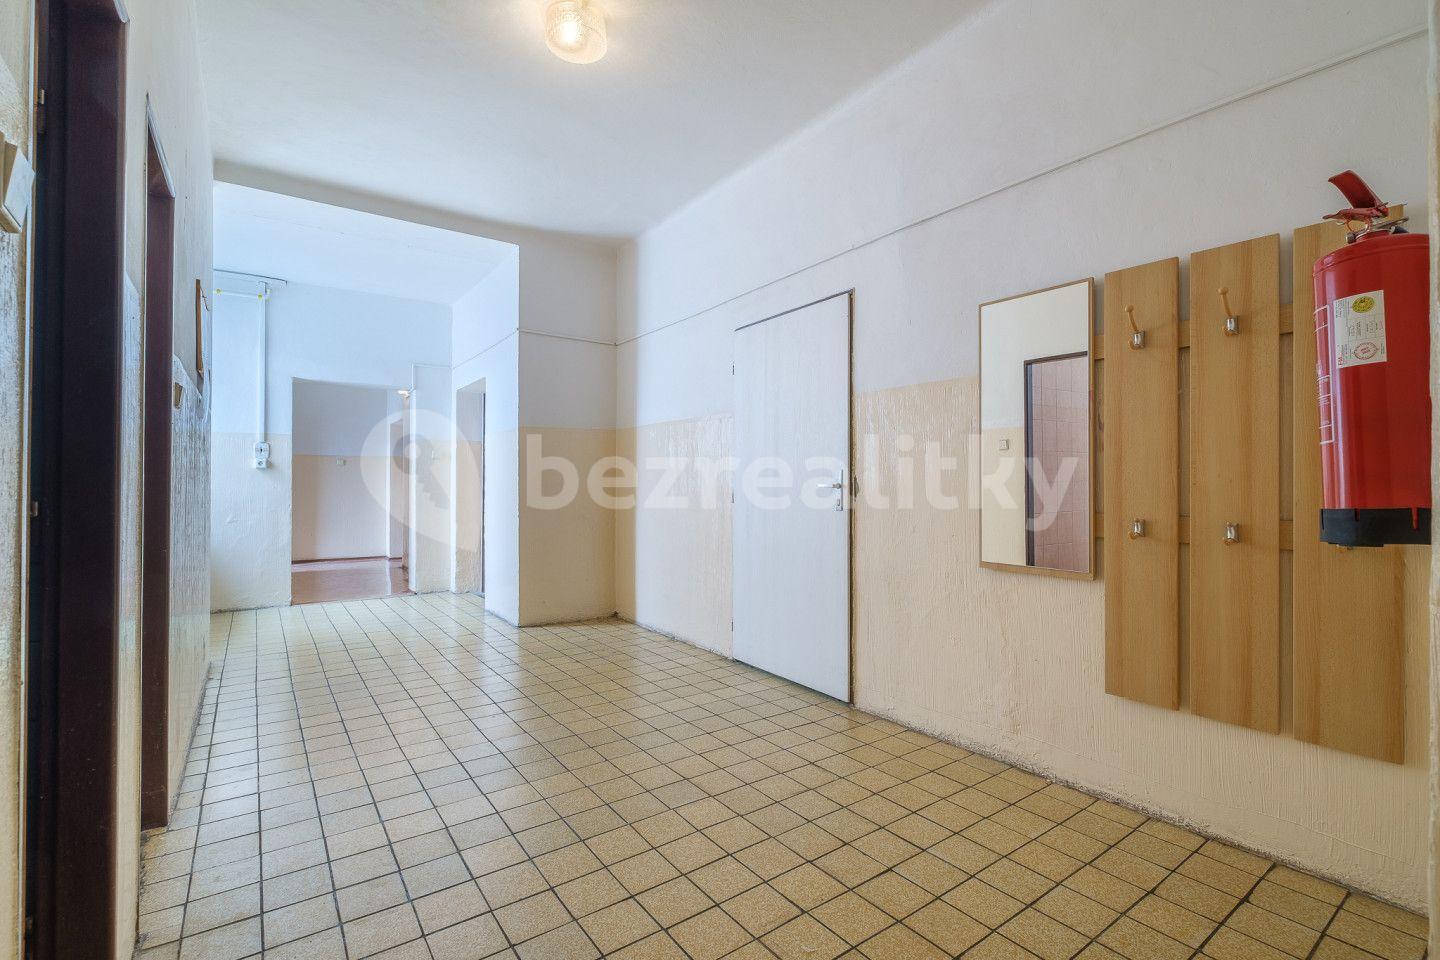 Prodej nebytového prostoru 777 m², Pekařská, Cheb, Karlovarský kraj